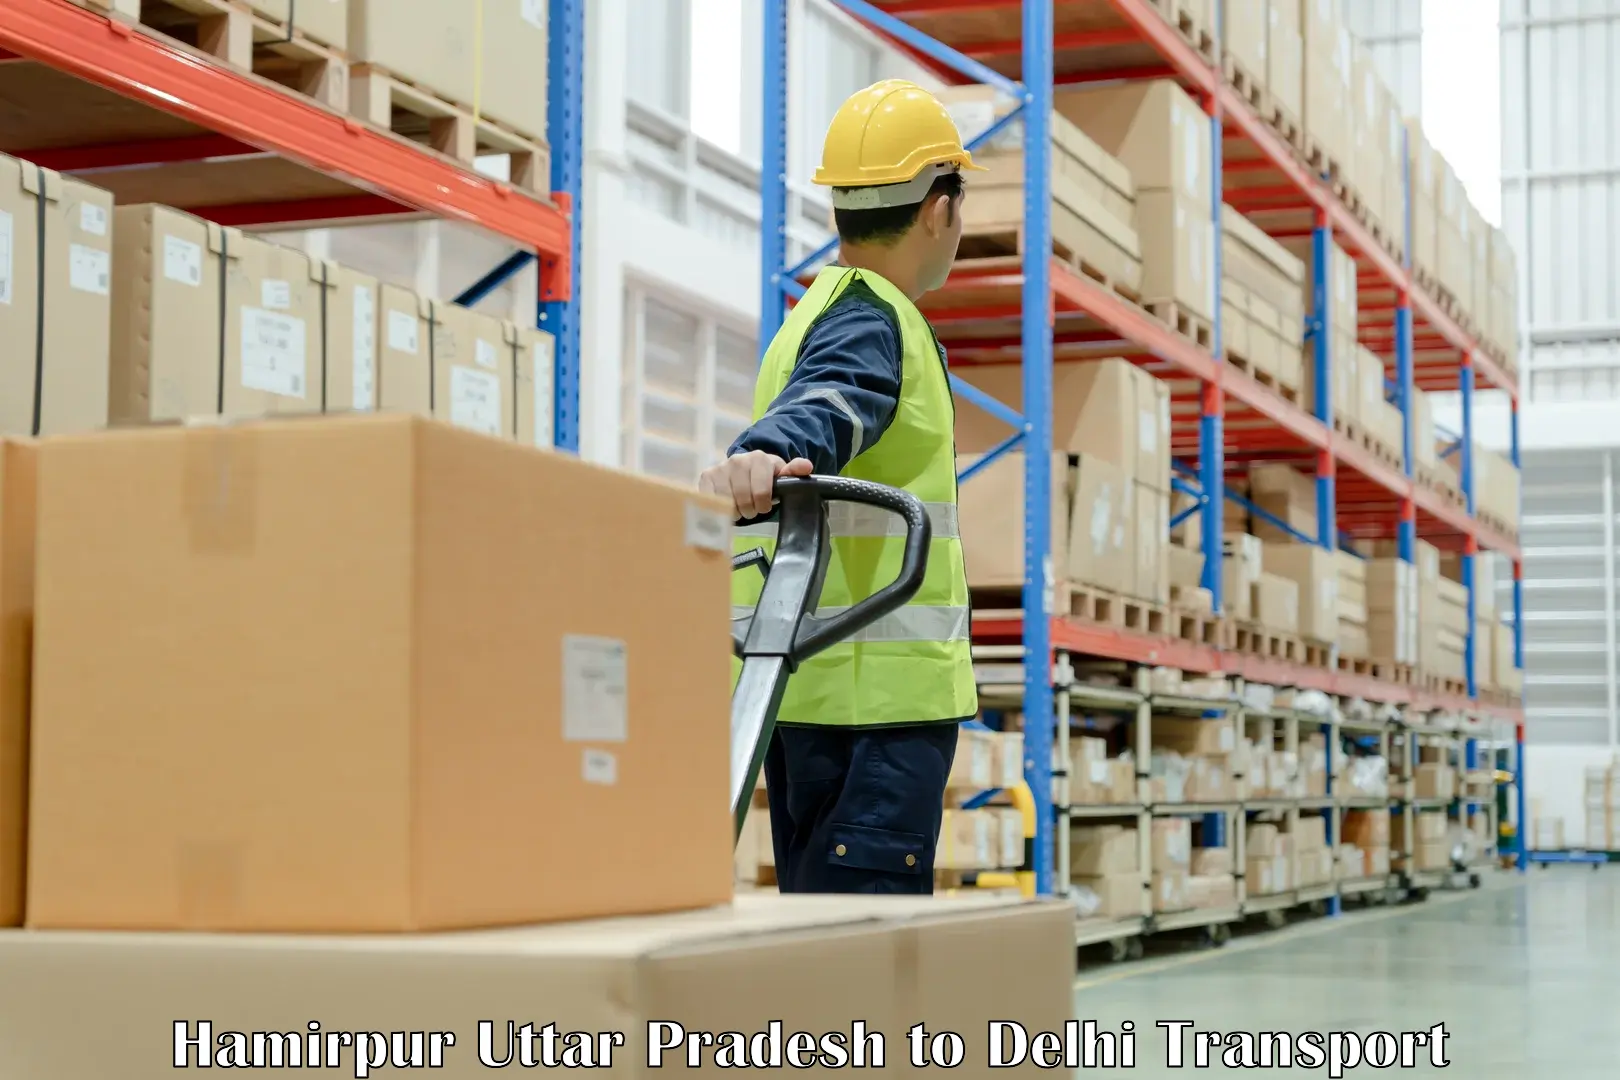 Goods delivery service Hamirpur Uttar Pradesh to Delhi